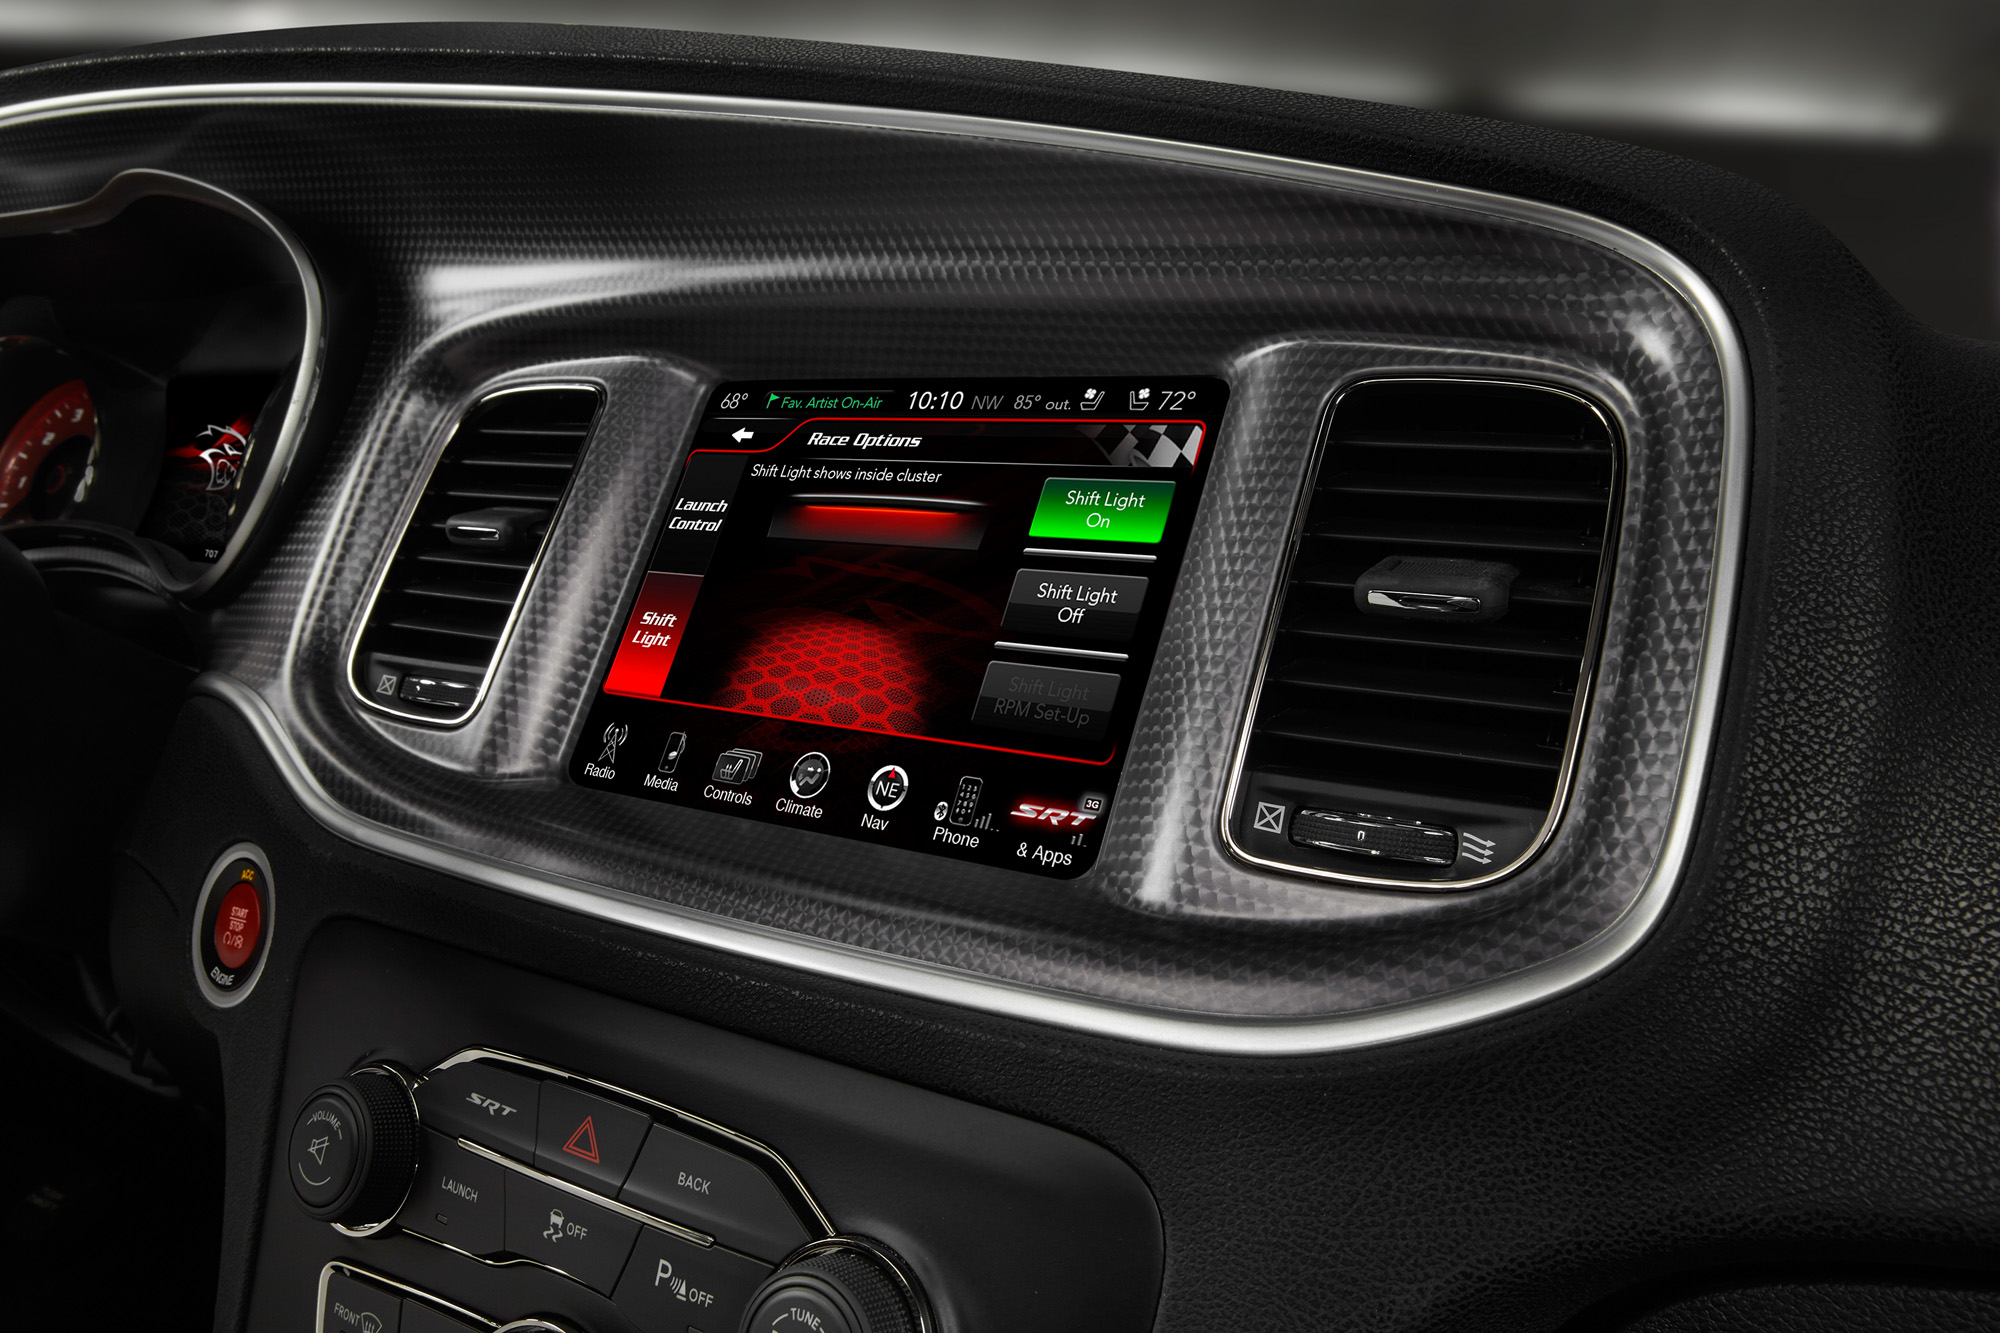 2015 Dodge Charger SRT - Shift Light Setup screen